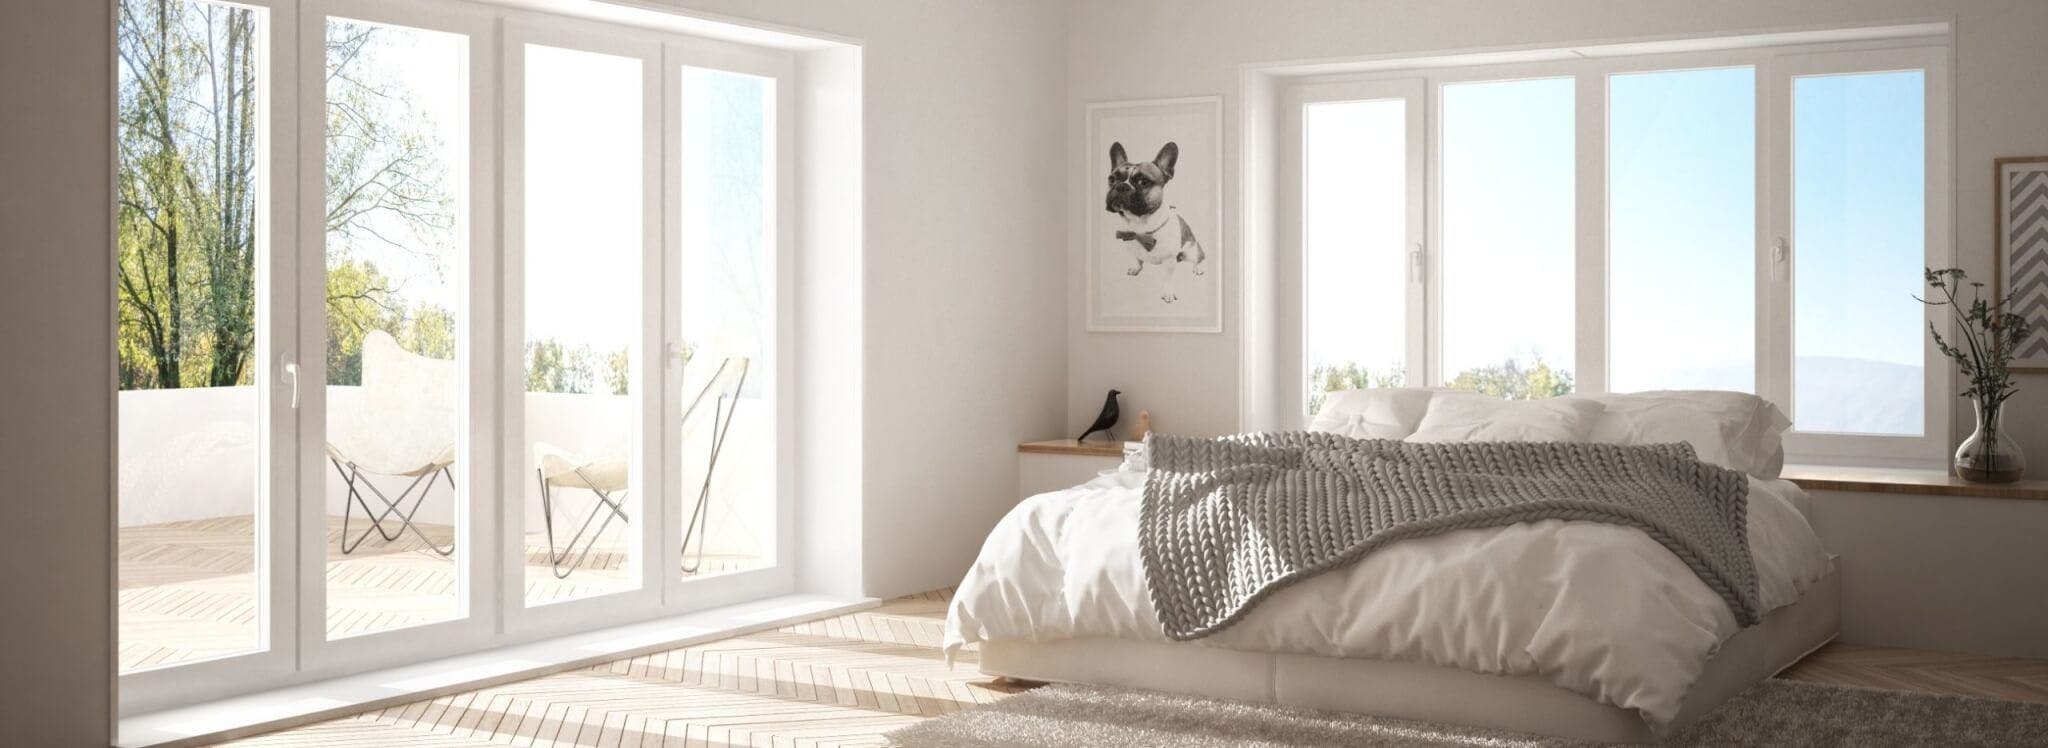 modern bedroom with energy-efficient windows